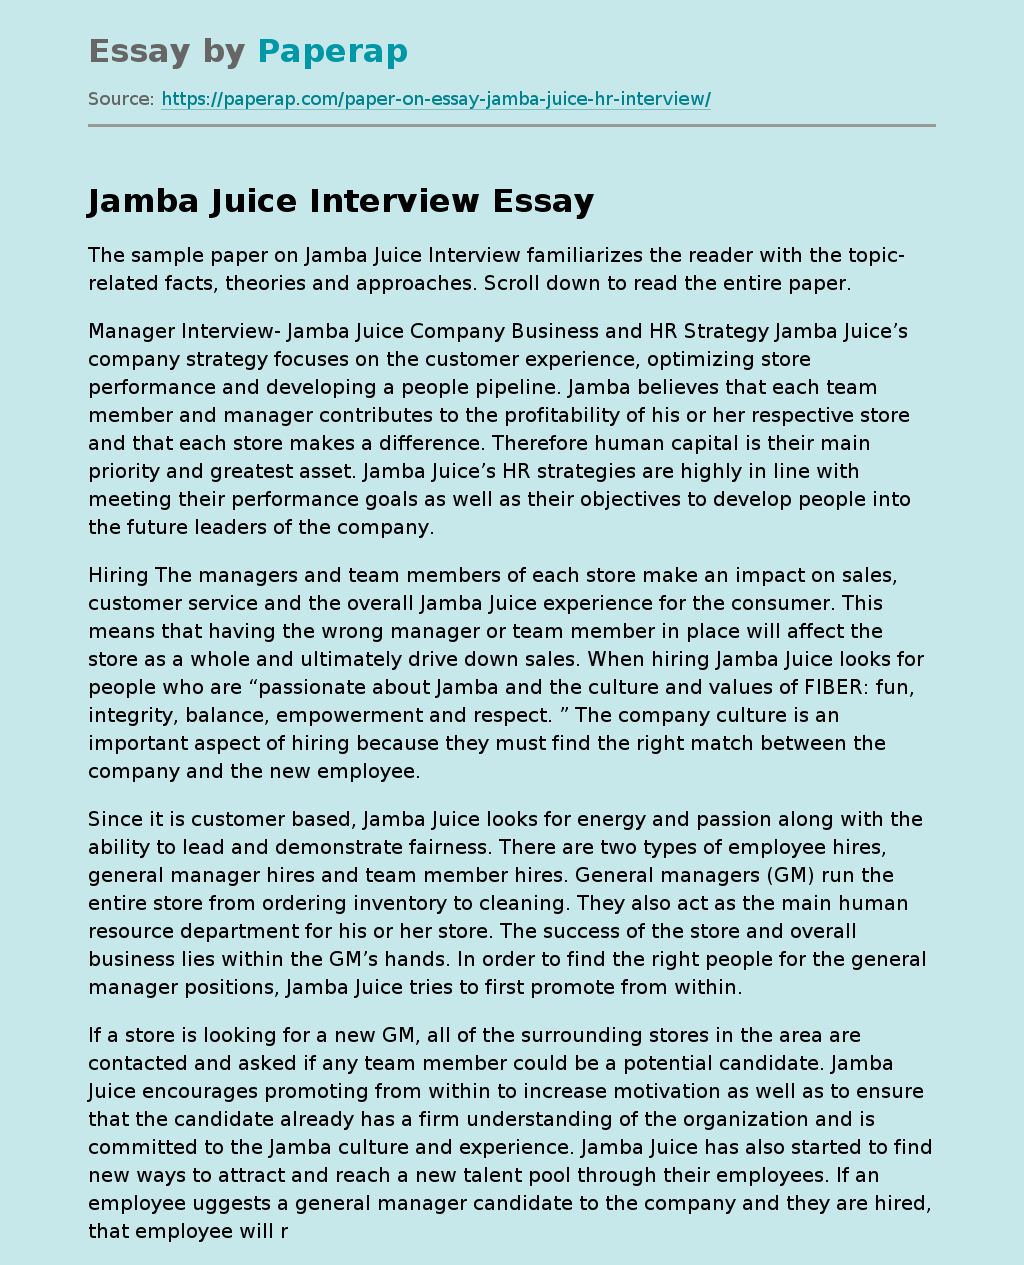 Sample Paper on Jamba Juice Interview